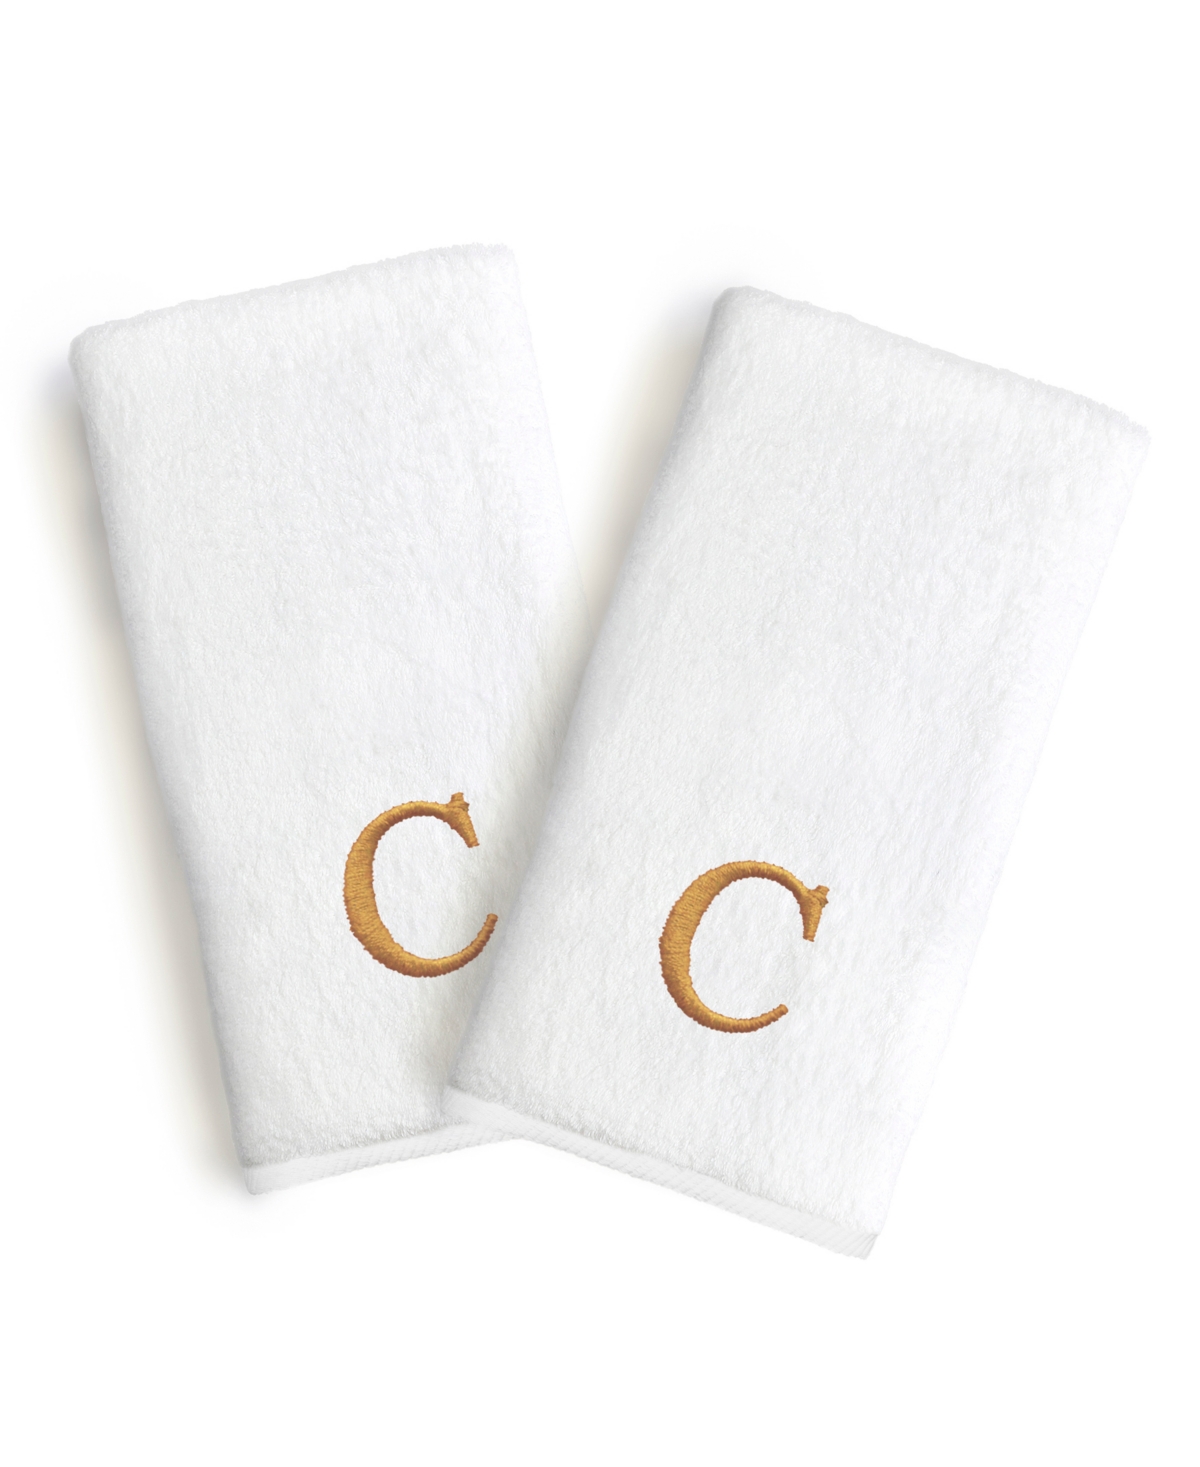 Linum Home Bookman Gold Font Monogrammed Luxury 100% Turkish Cotton Novelty 2-piece Hand Towels, 16" X 30" Bedd In Gold - C